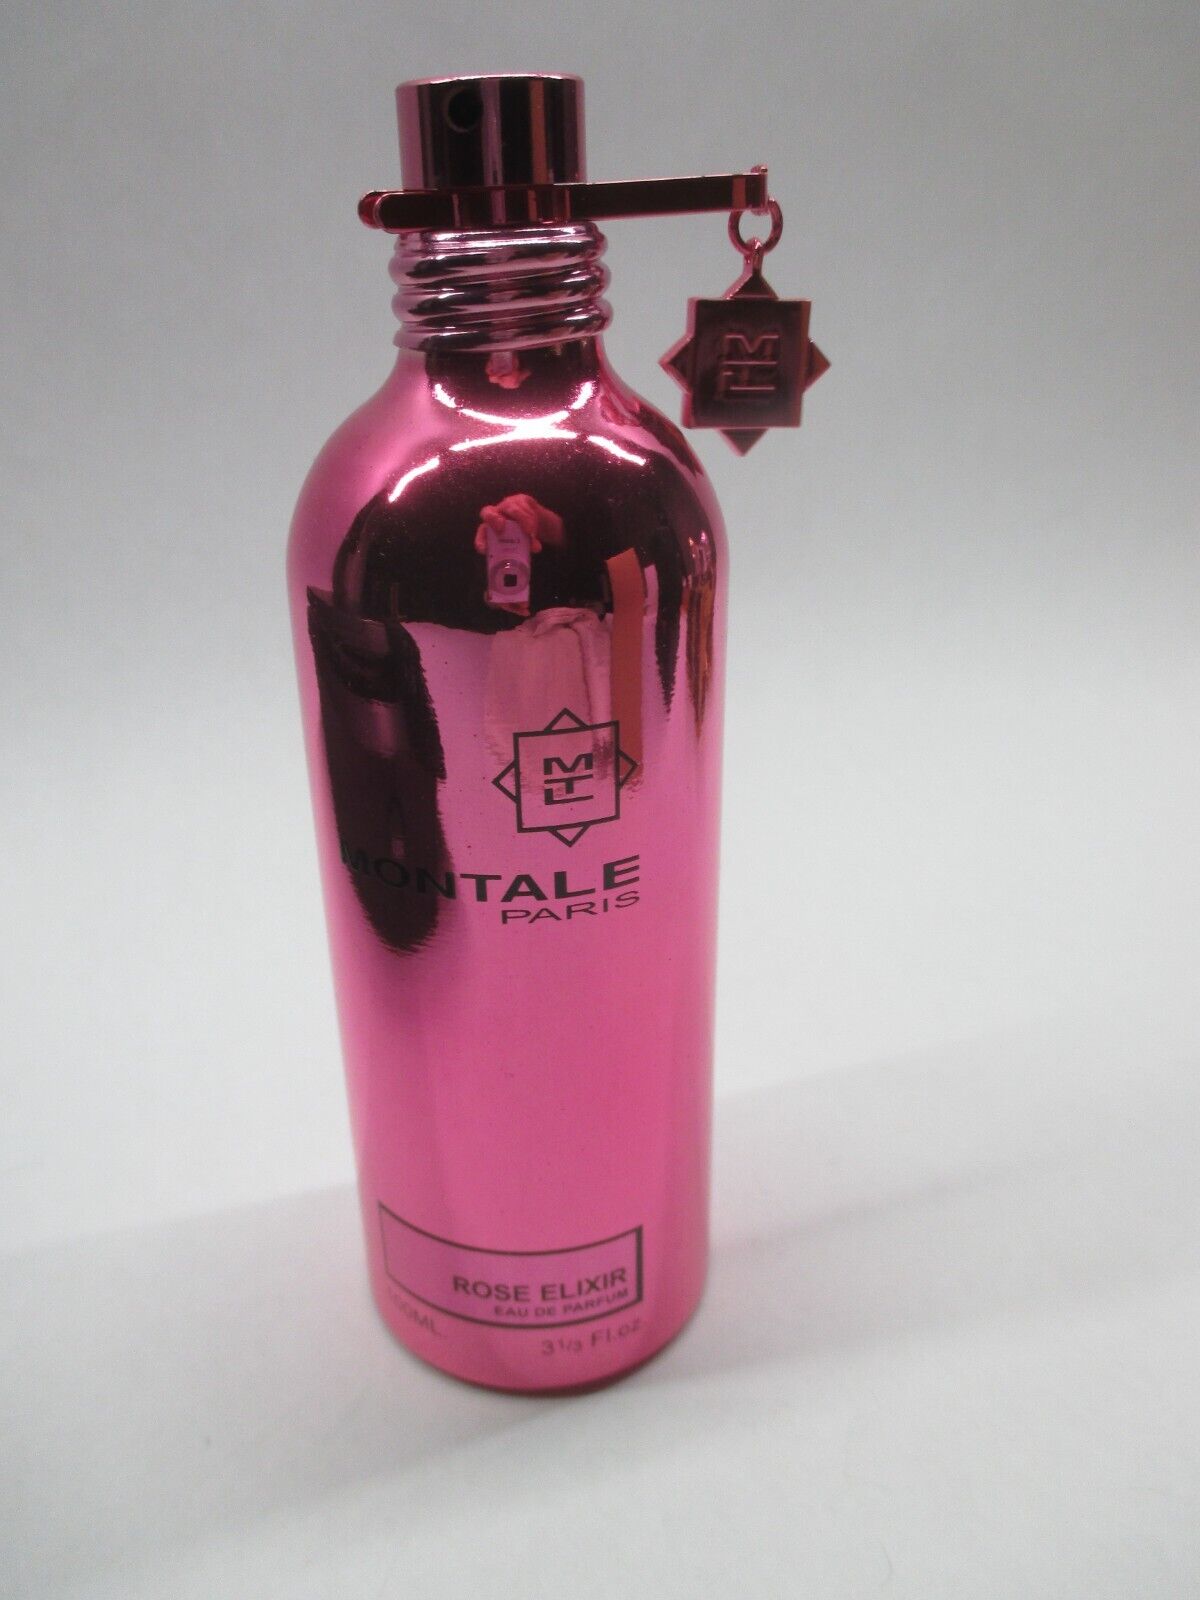 Montale Paris Rose Elixir EDP Spray 3.4 Fl oz/ 100 ml